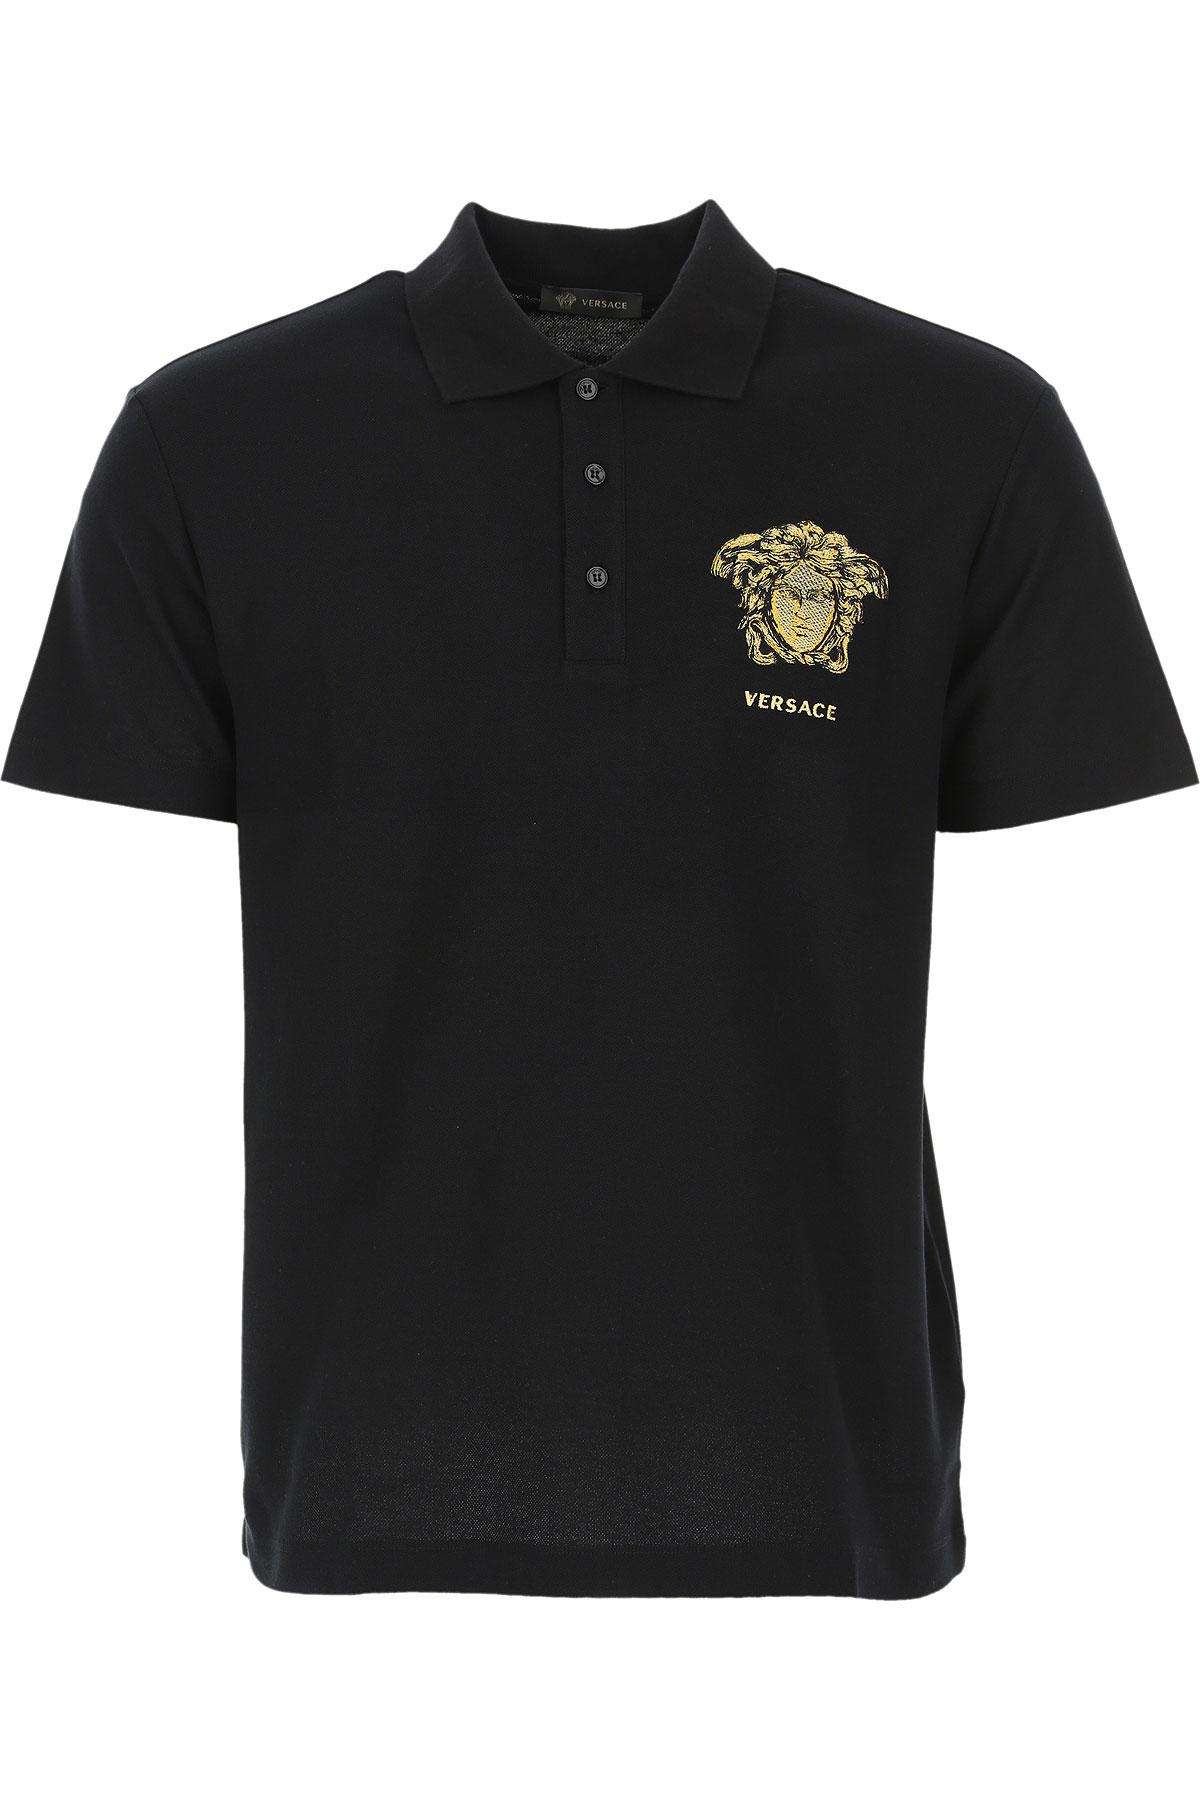 Versace Polo Shirt For Men in Black for Men - Lyst